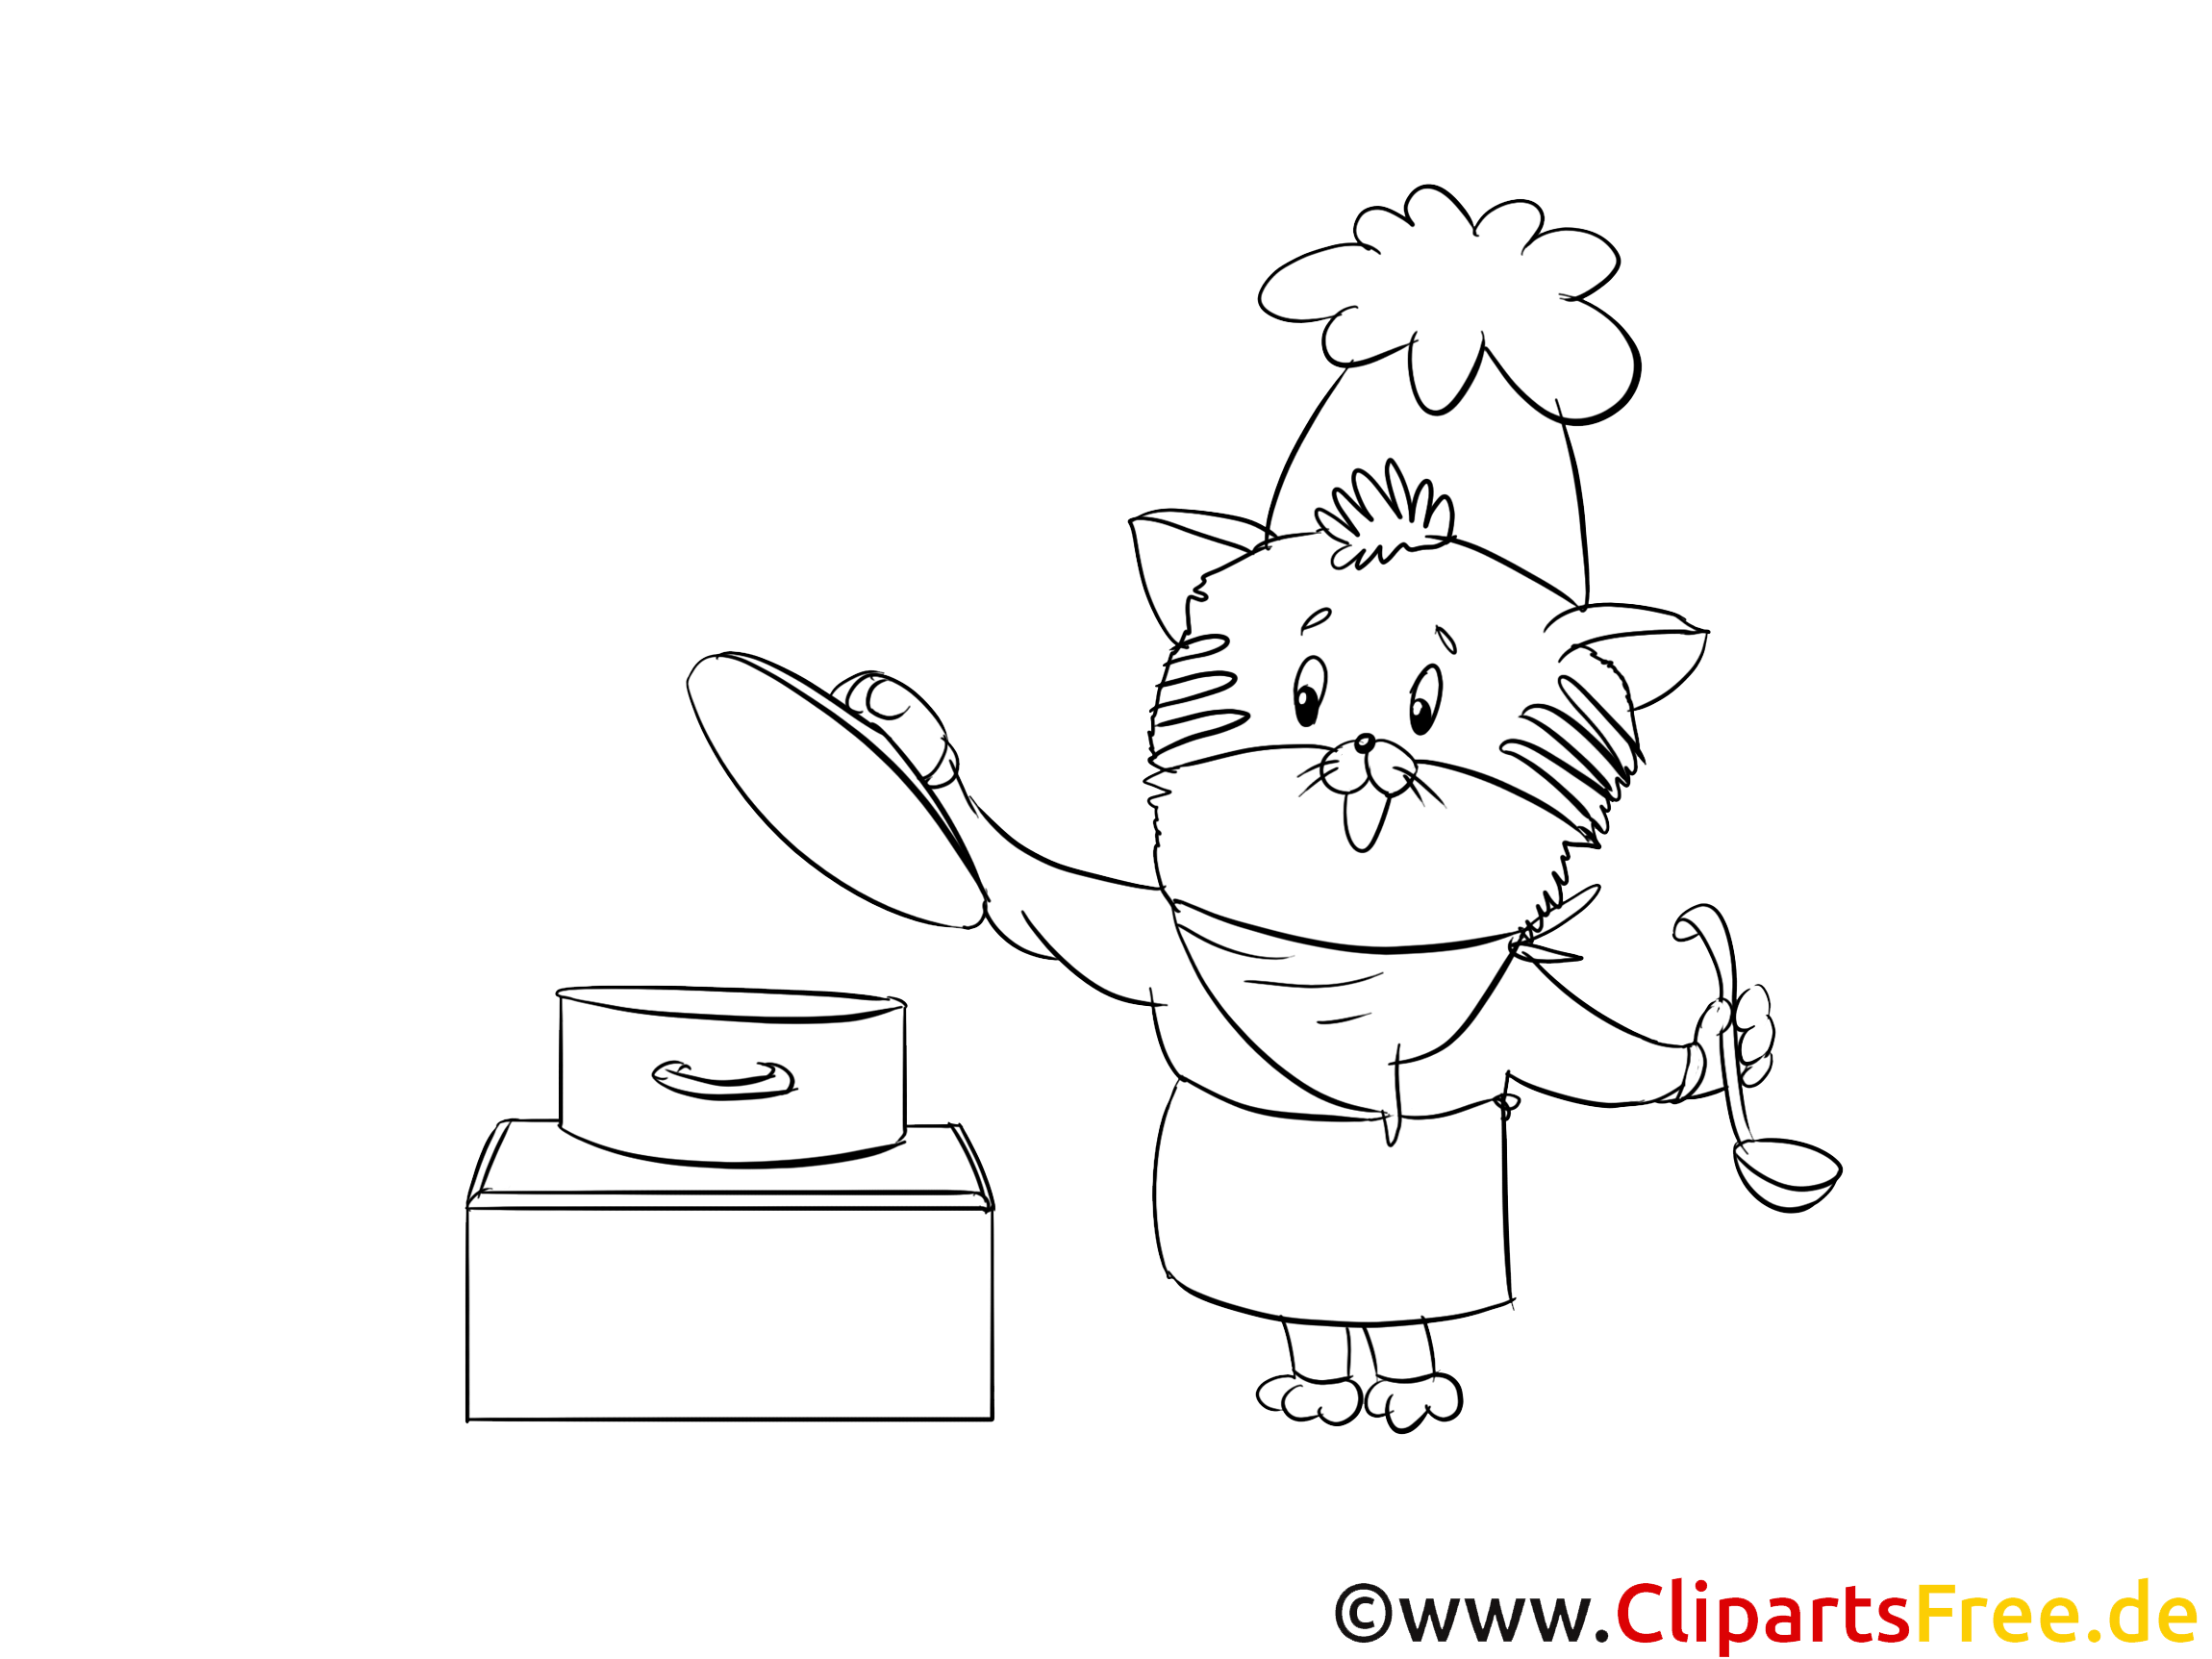 Cuisinier cliparts gratuis – Cartoons à imprimer